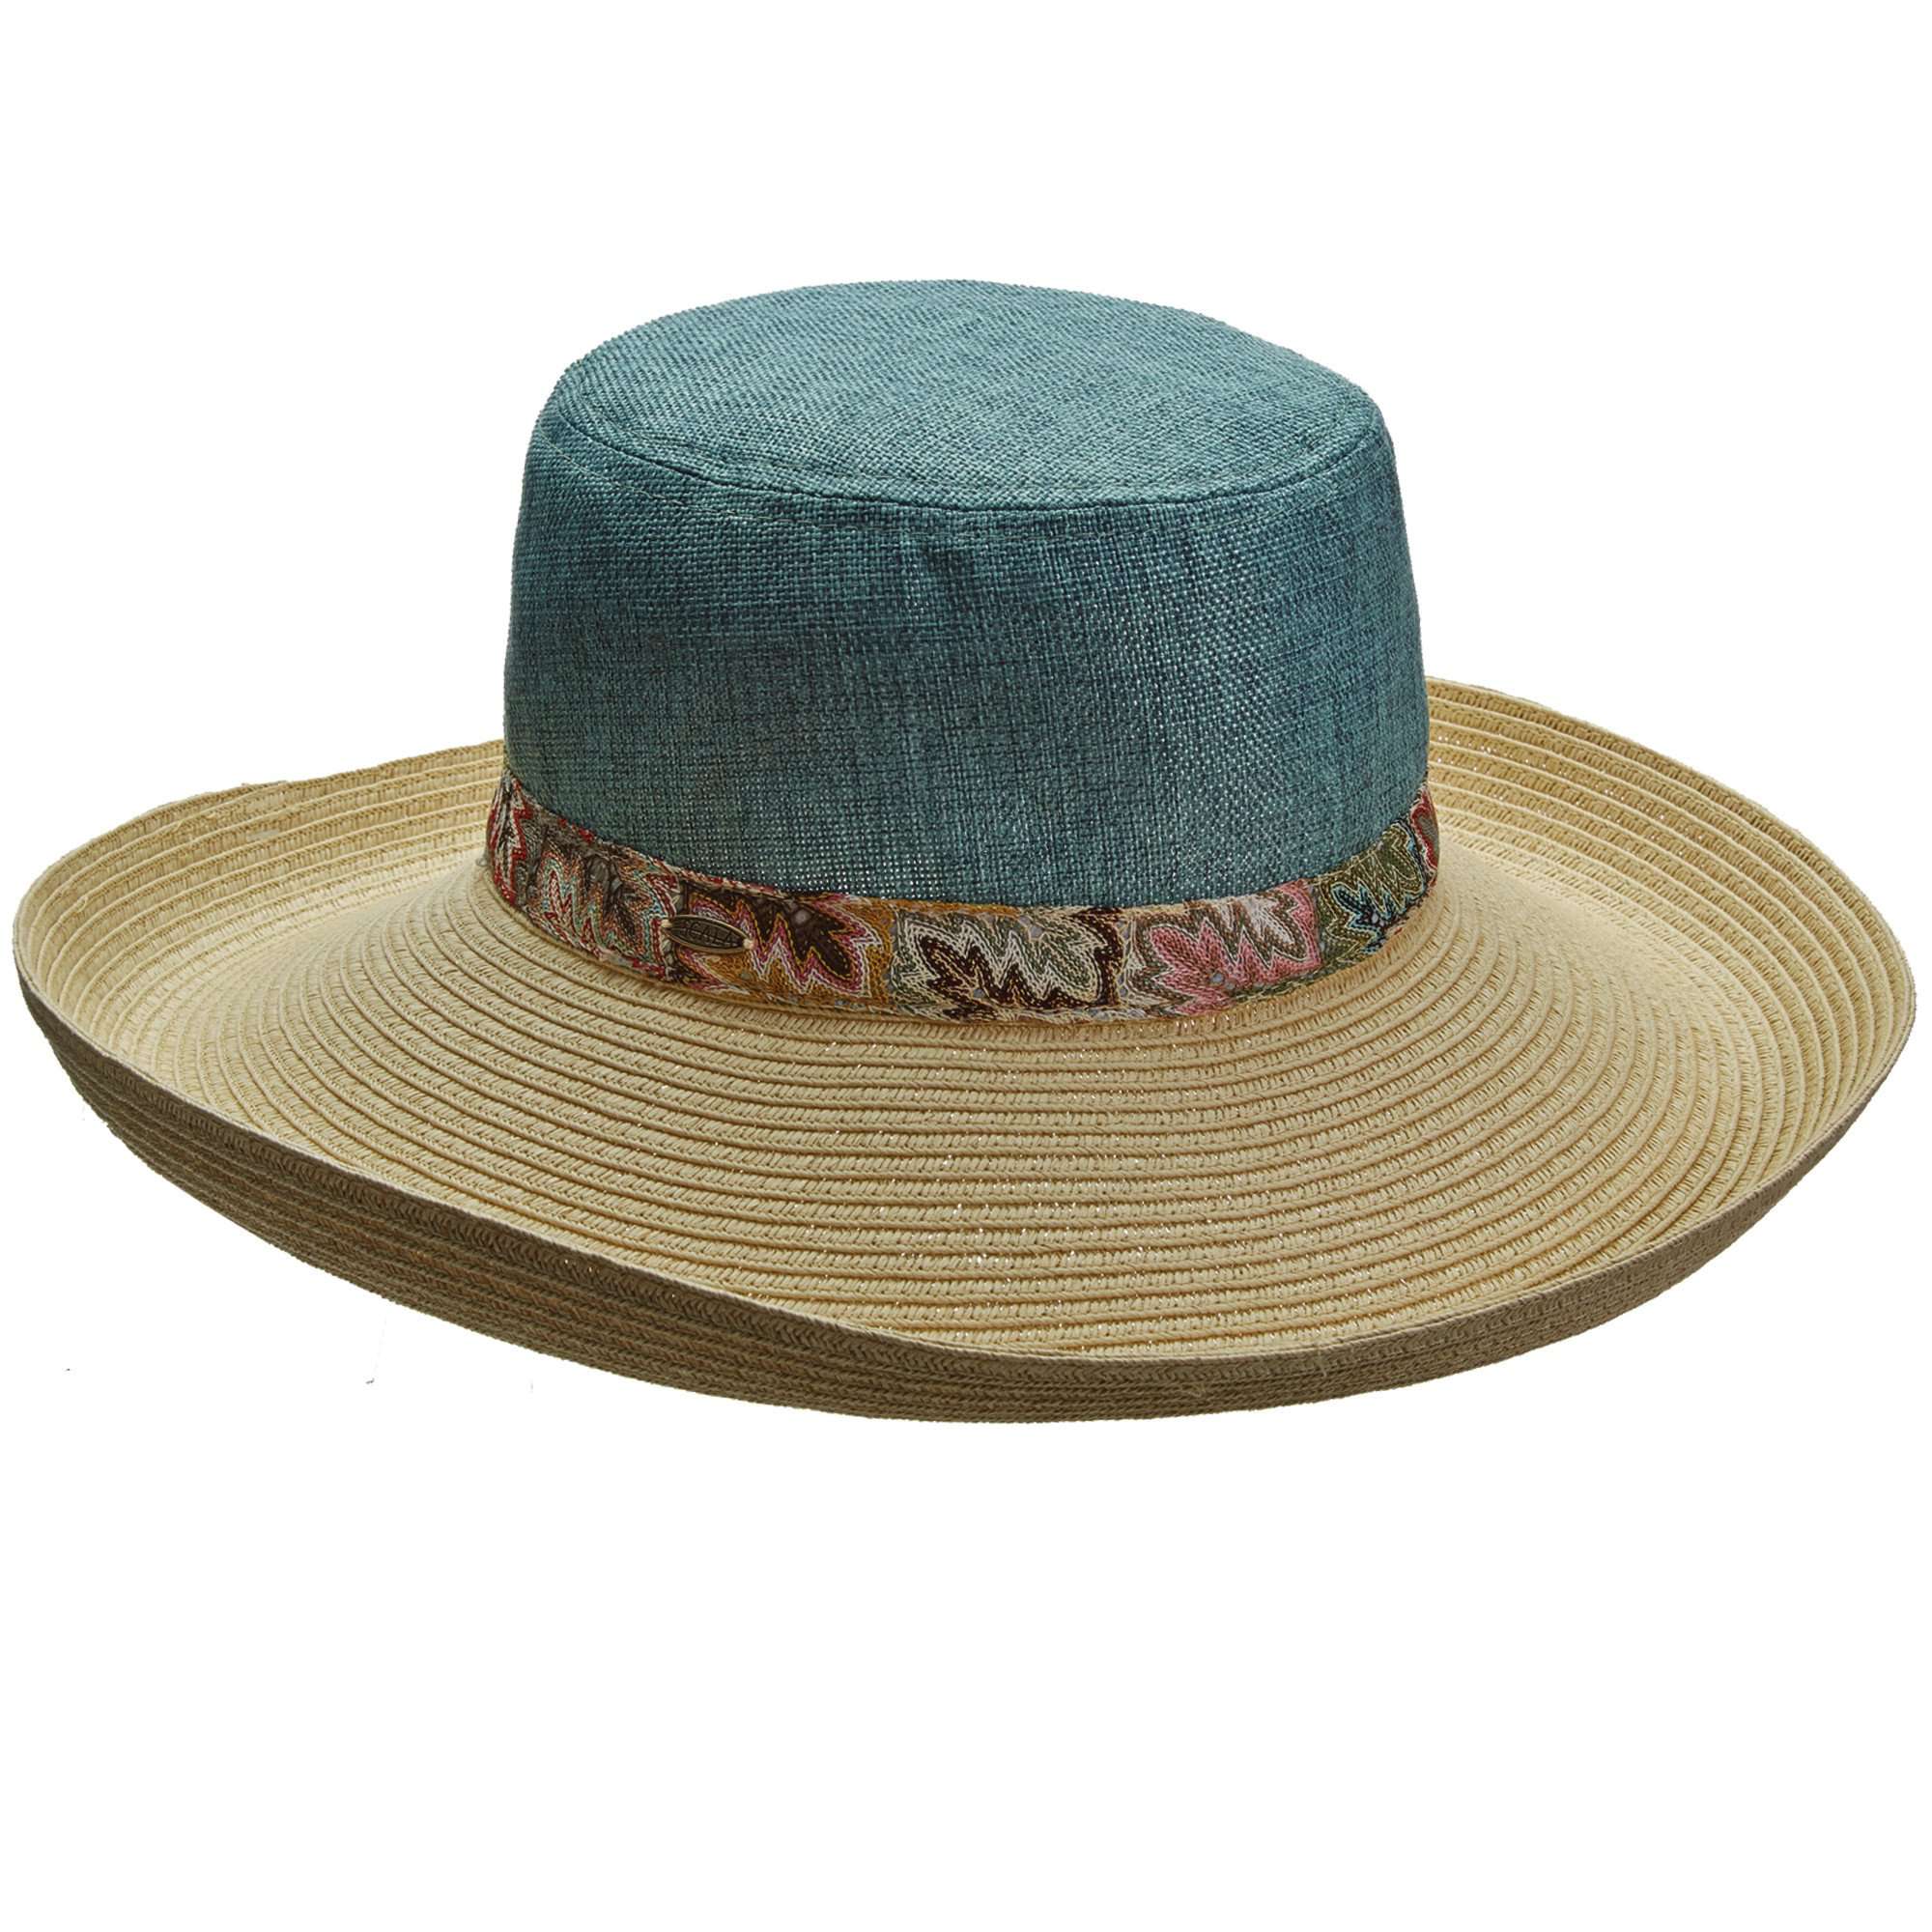 Upturned Brim Linen Crown Summer Hat - Callanan Hats Kettle Brim Hat Callanan Hats CR261TL Teal Medium (57 cm) 